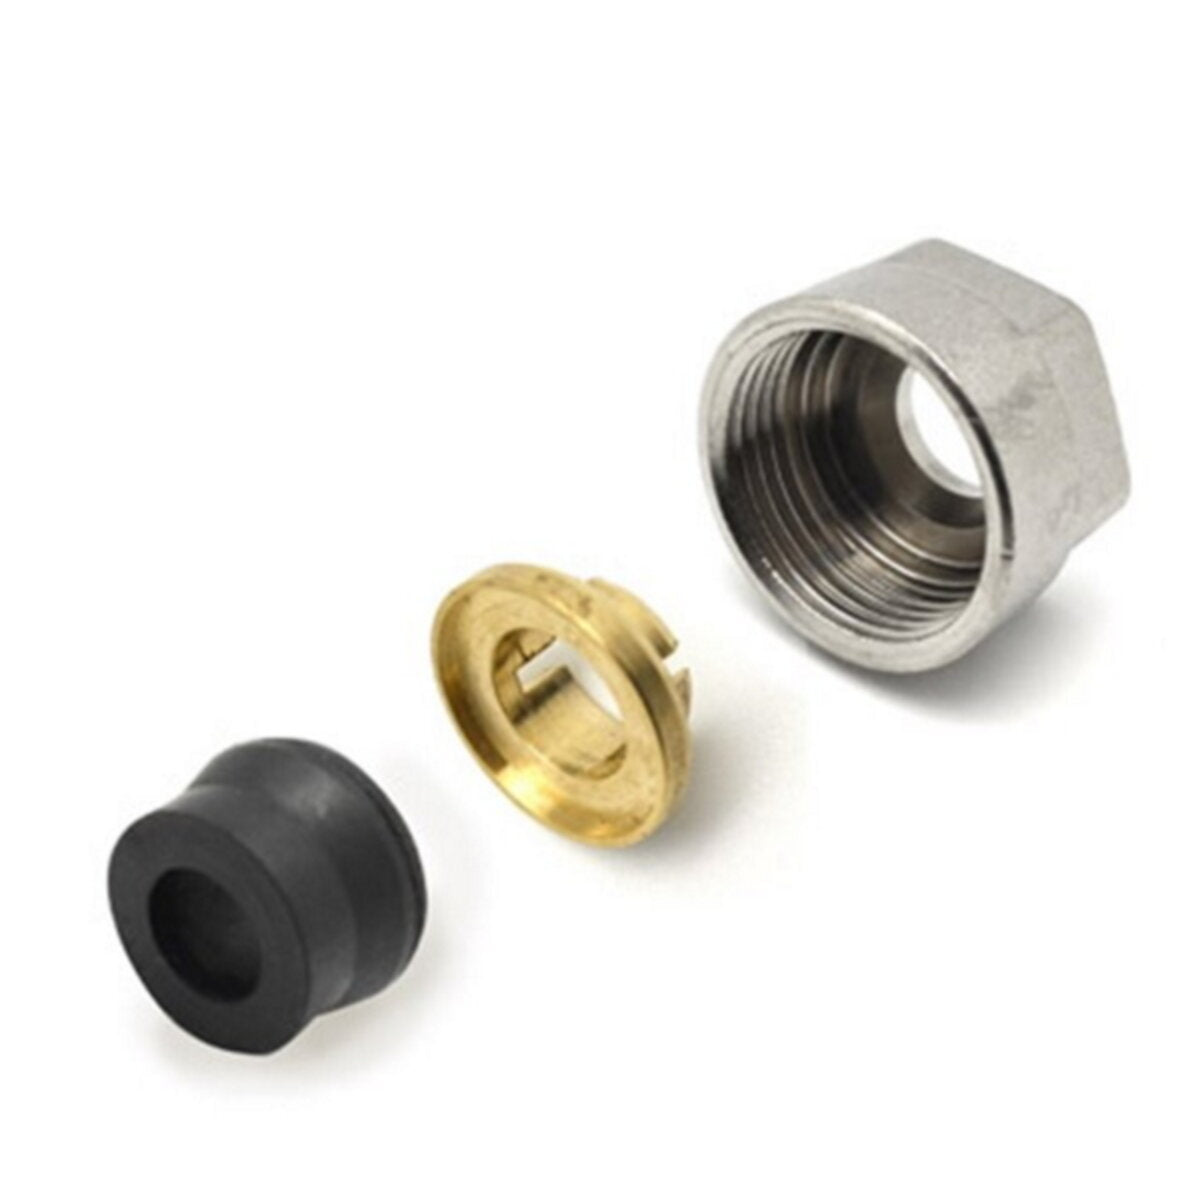 Chrome-plated rubber lockshield valve fitting for 16x2 copper pipe for Ercos lockshield valves